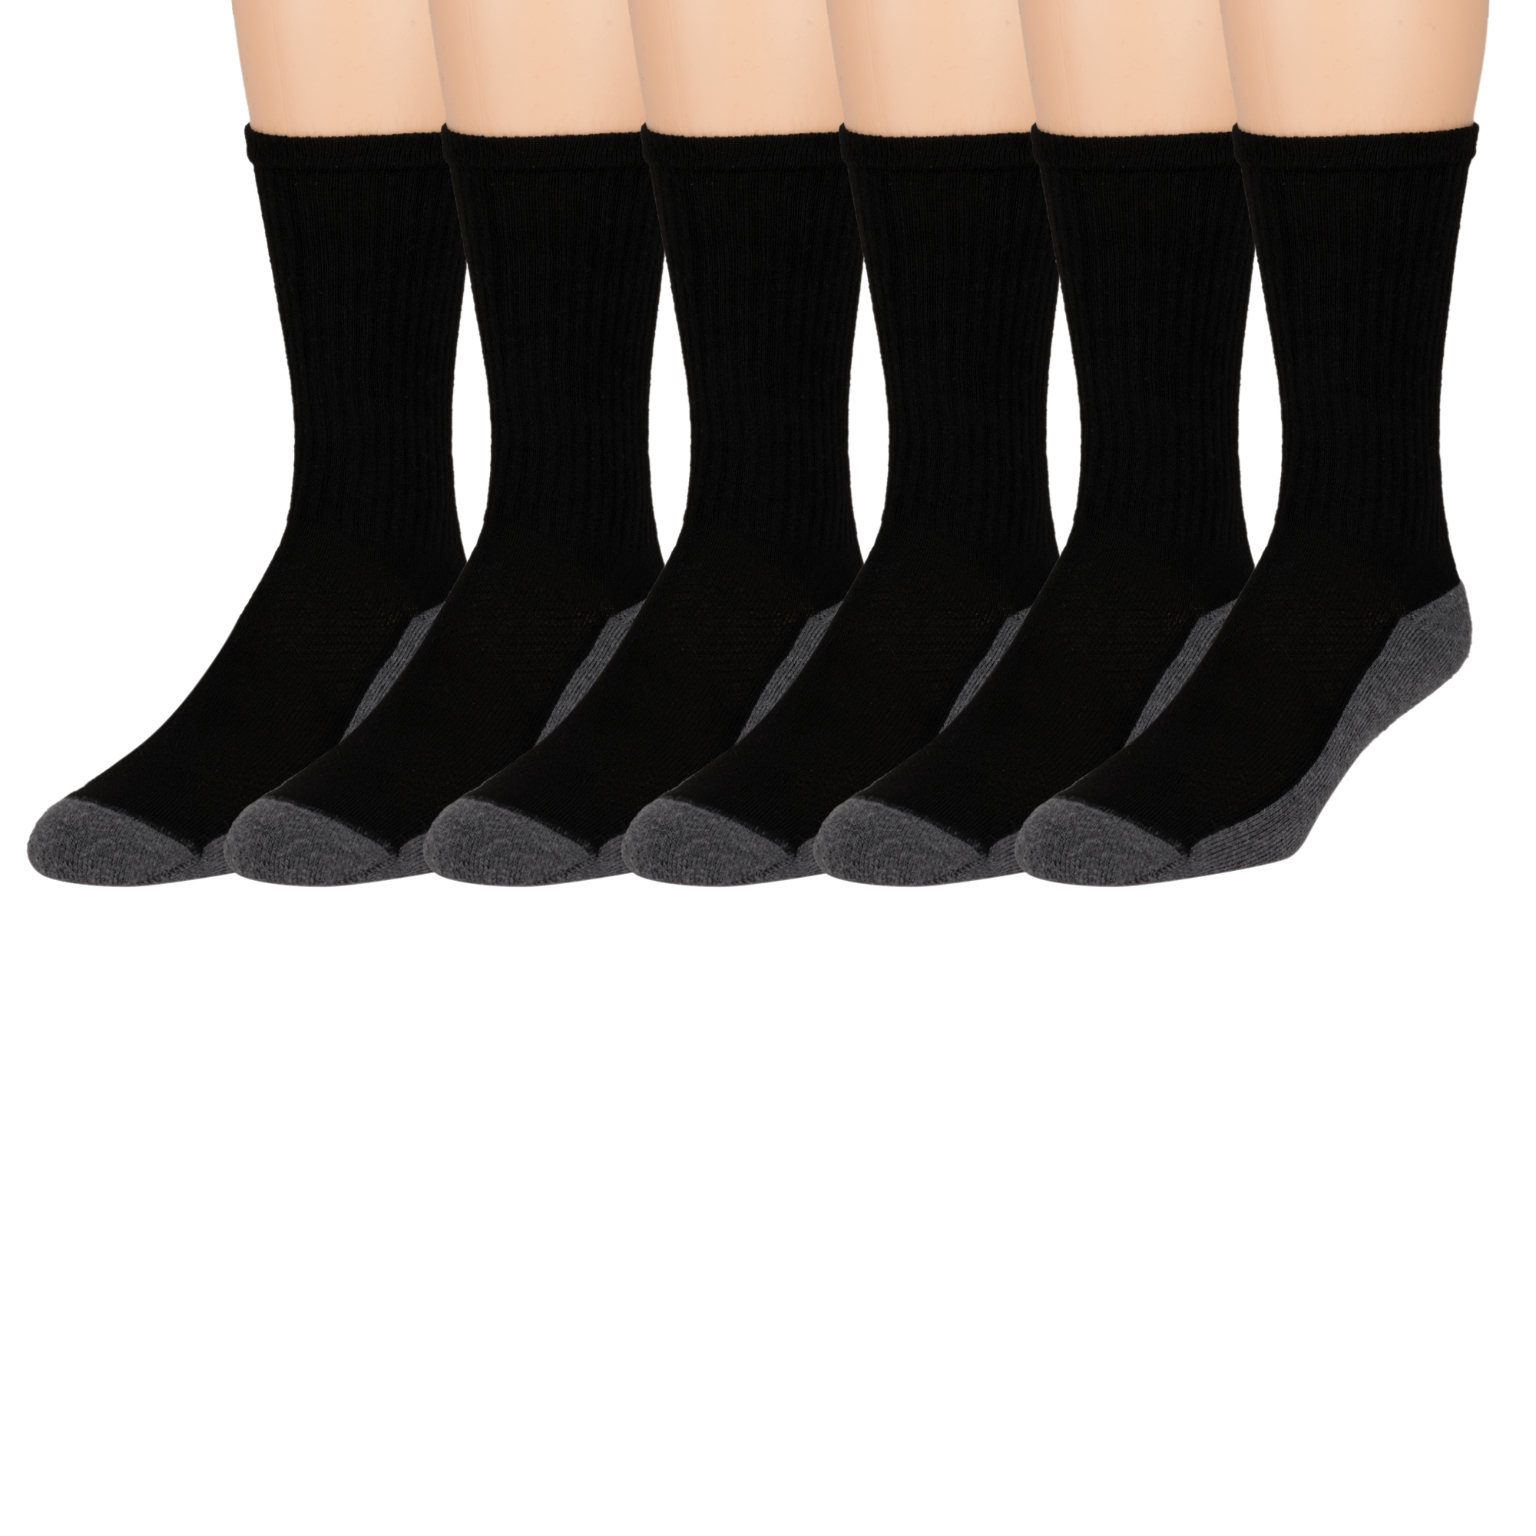 Wholesale Hanes Irregular Men's Crew Socks - Black, 10-13, 6 Pack